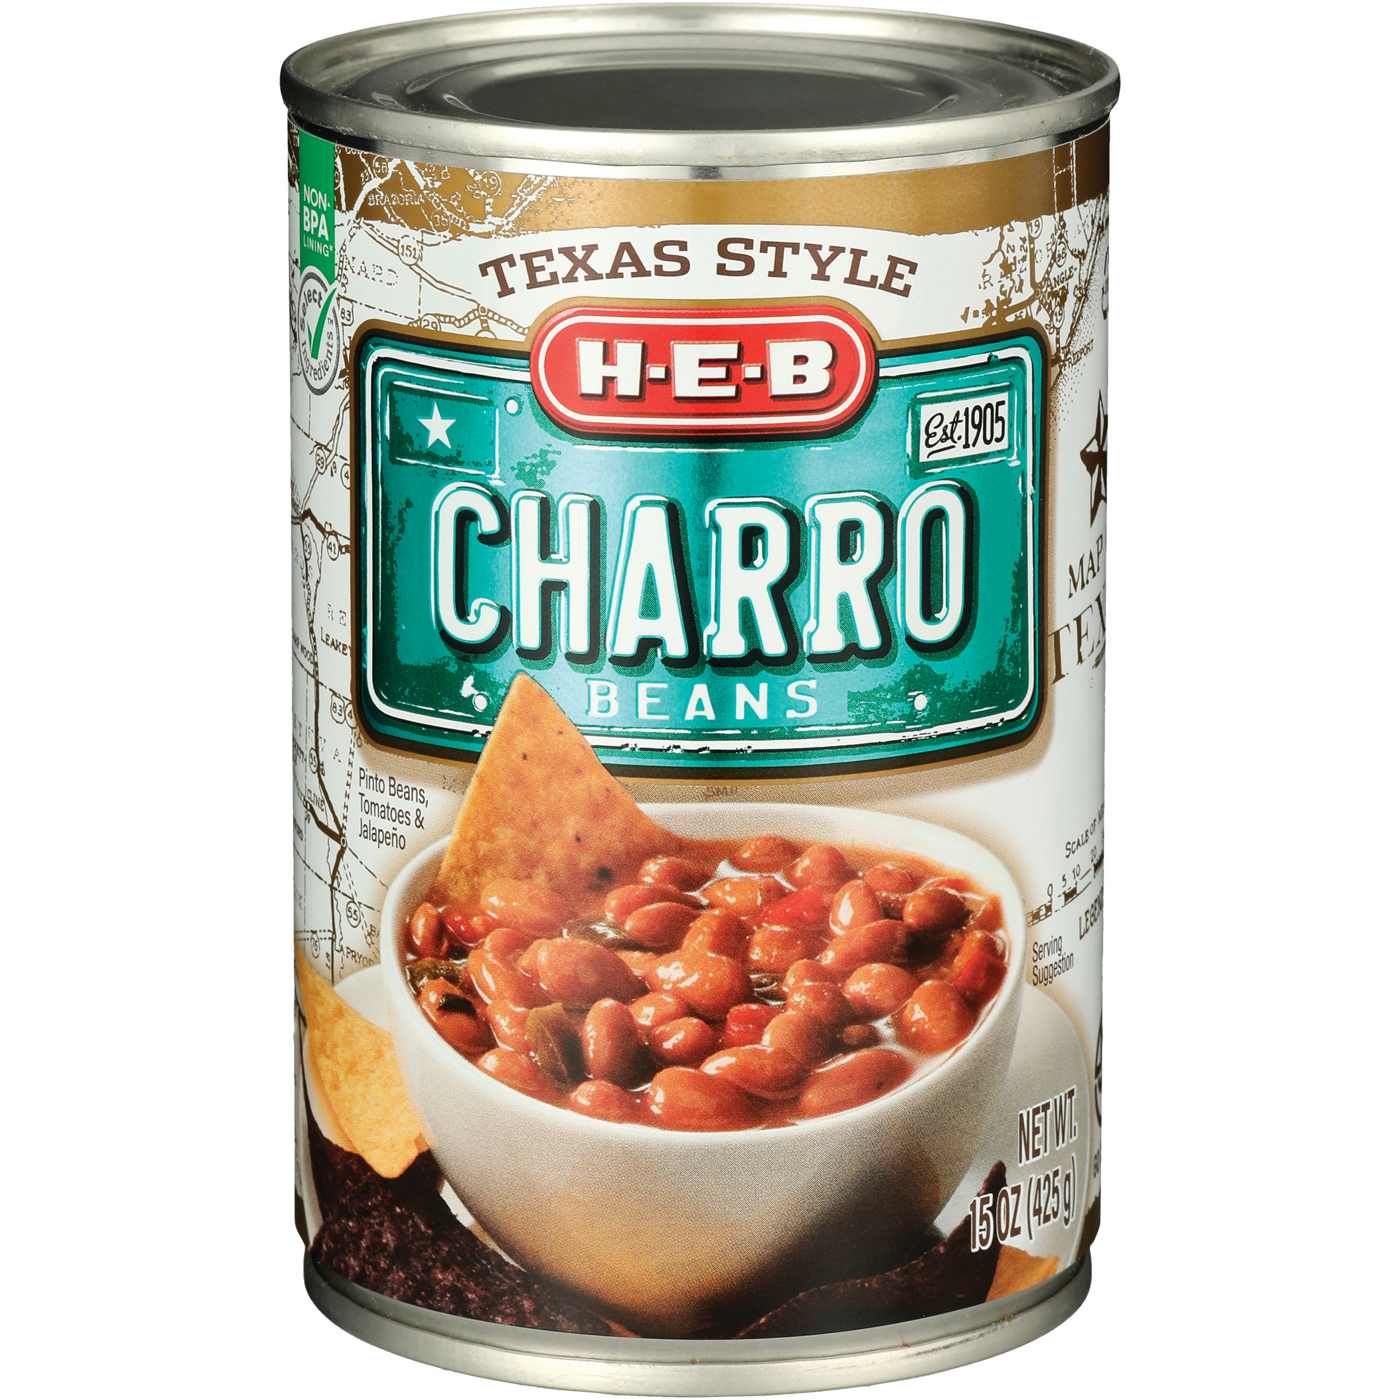 H-E-B Texas Style Charro Beans; image 1 of 2